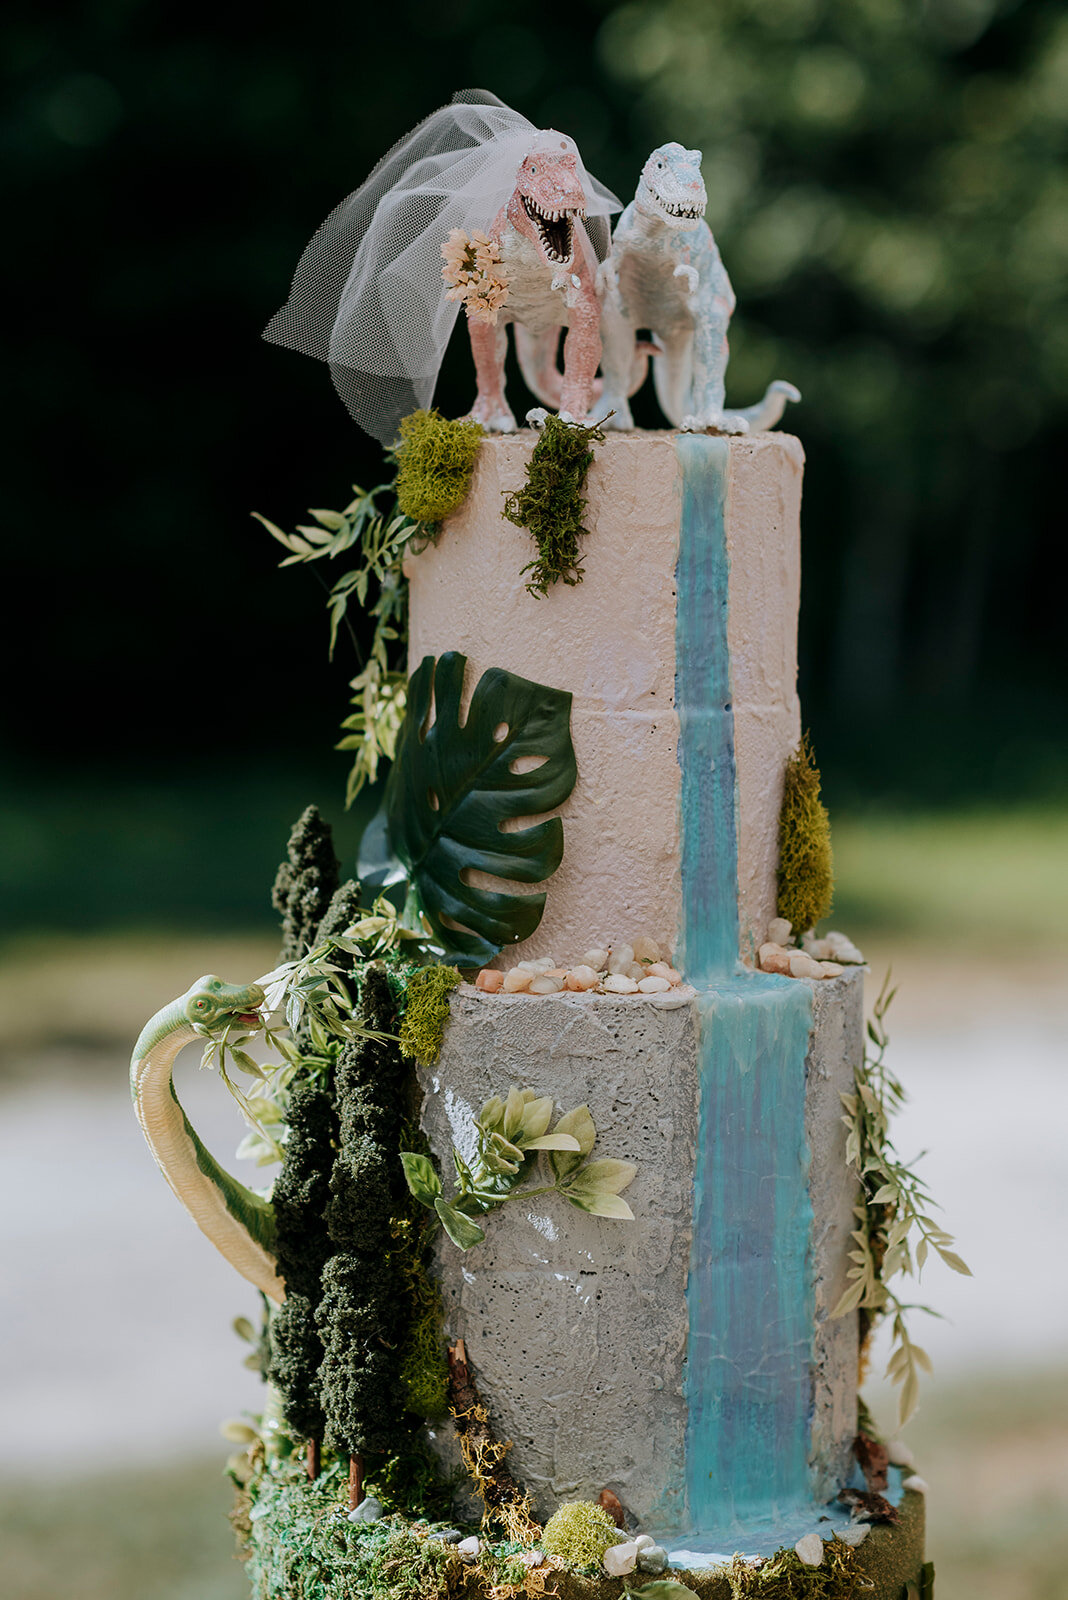 Jurassic Park theme wedding cake